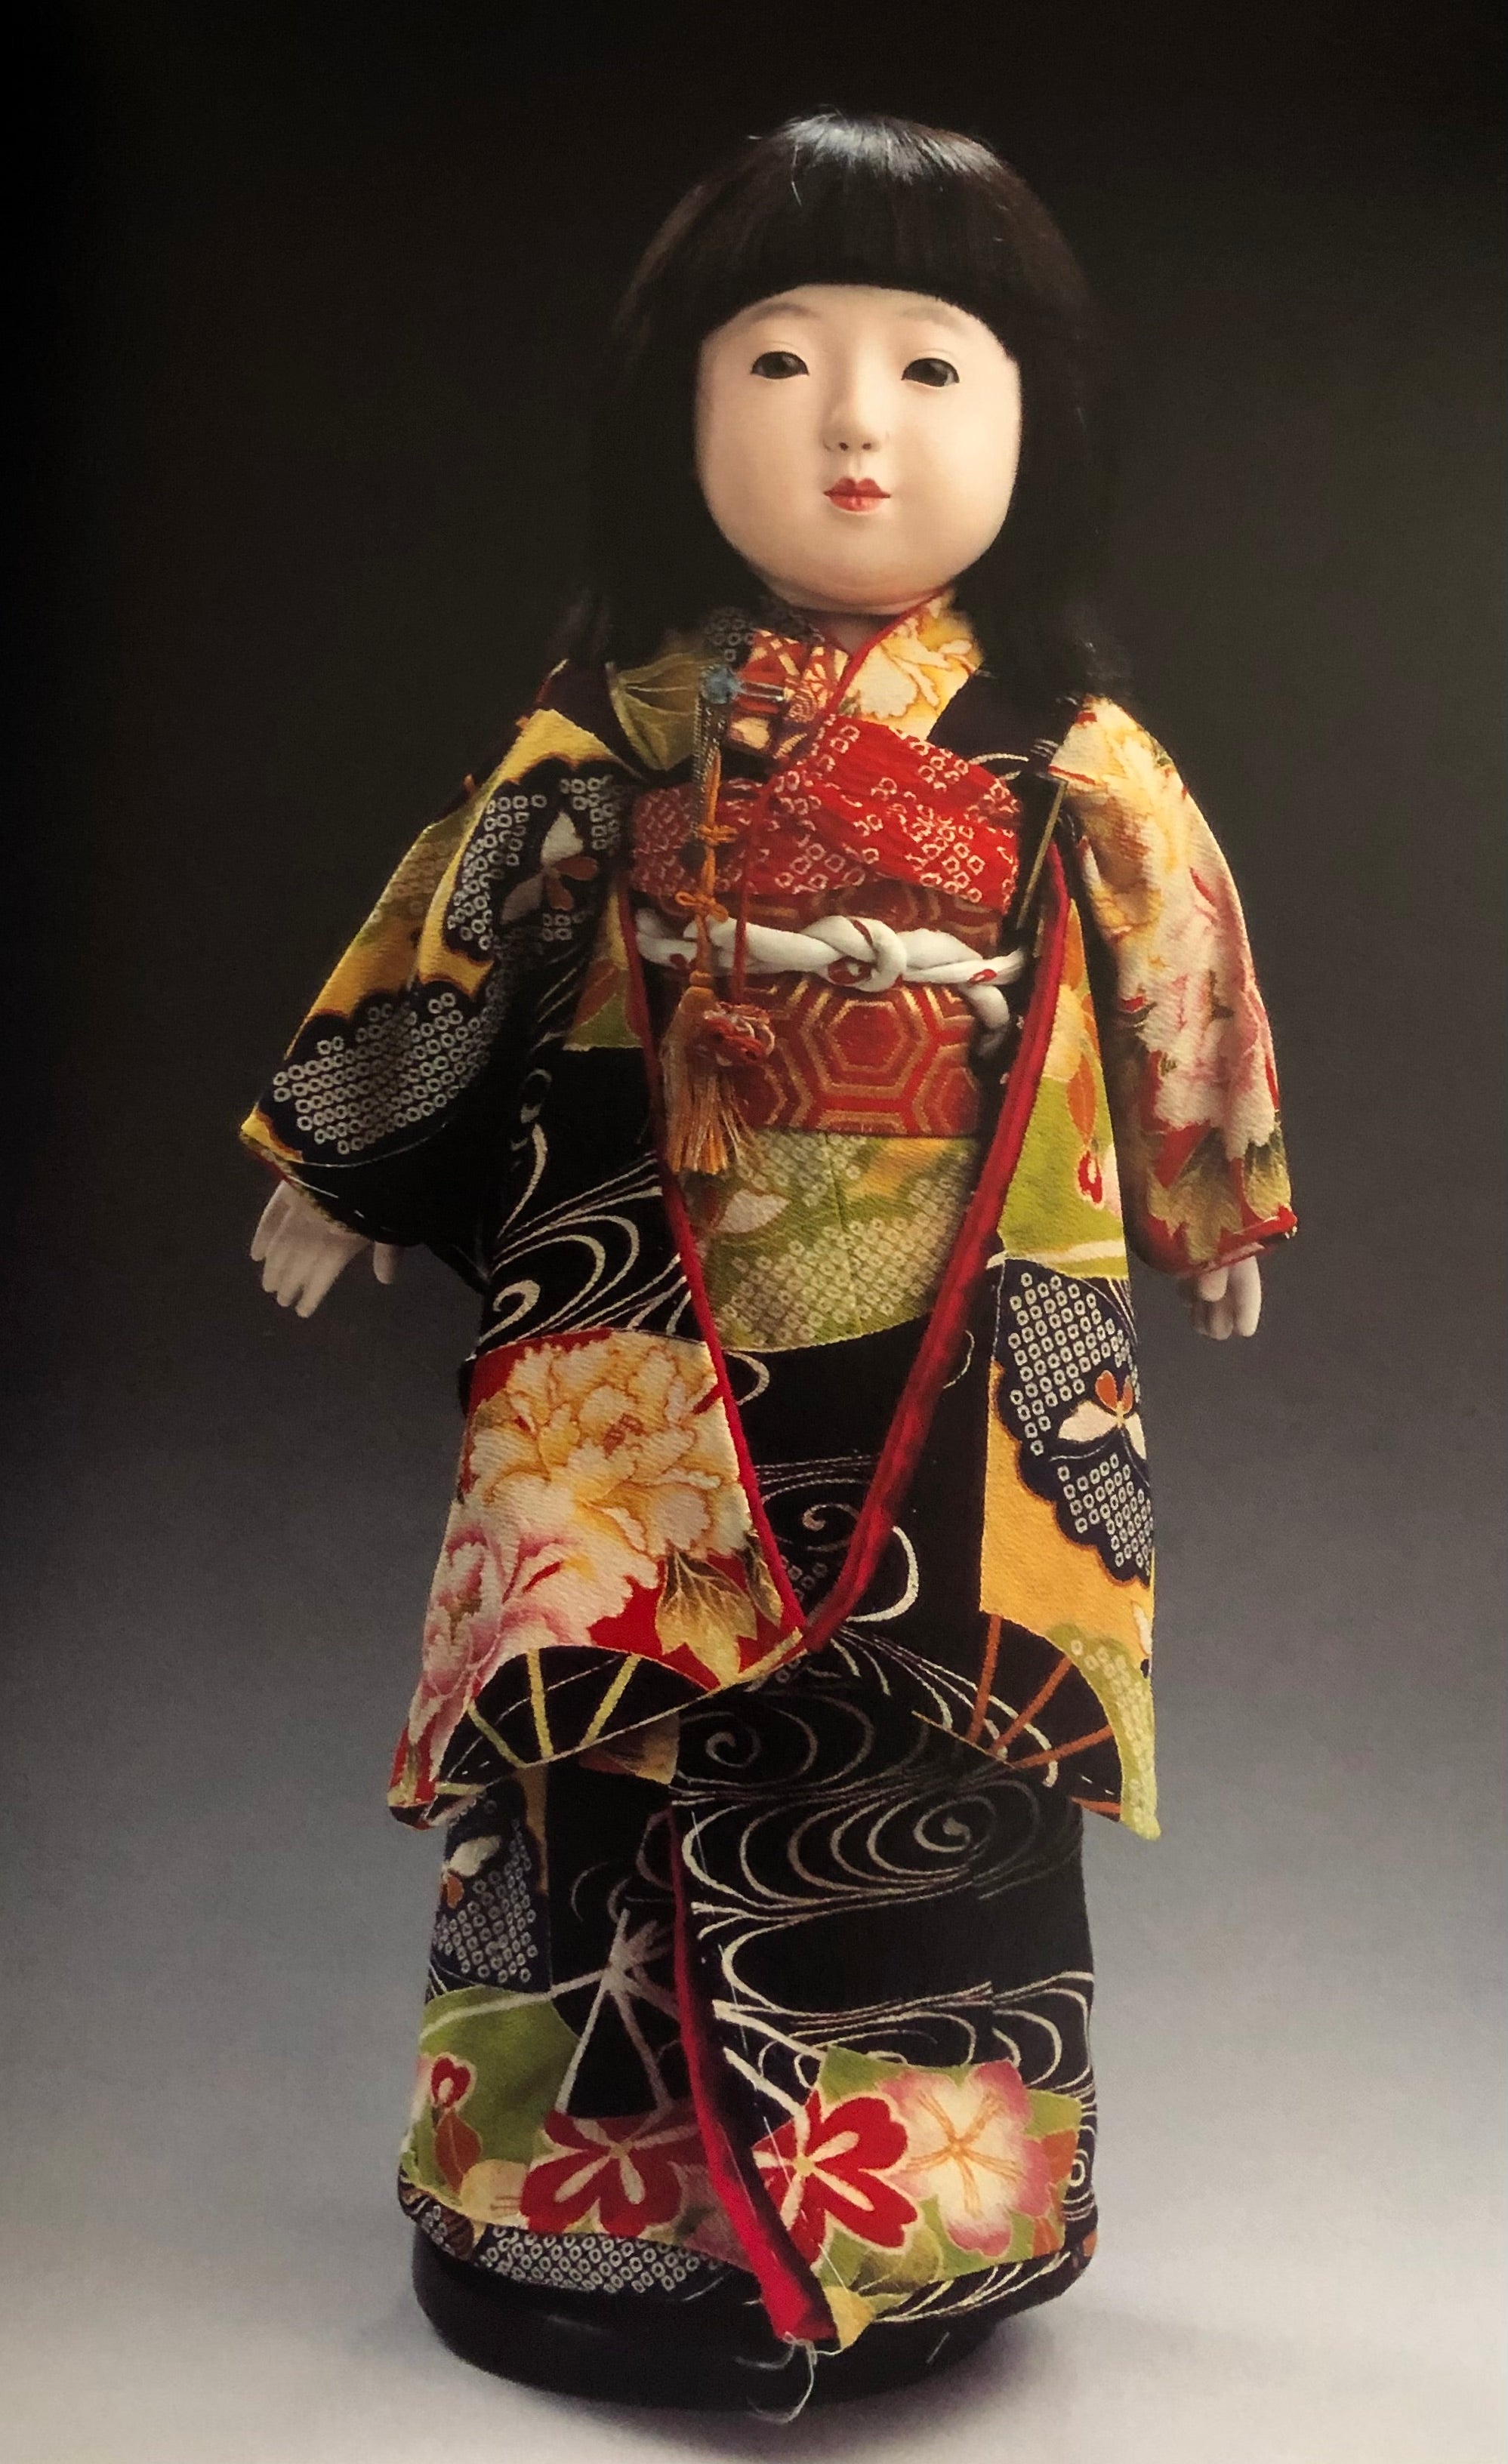 Ichimatsu - Dressed Up Traditional Japanese Dolls